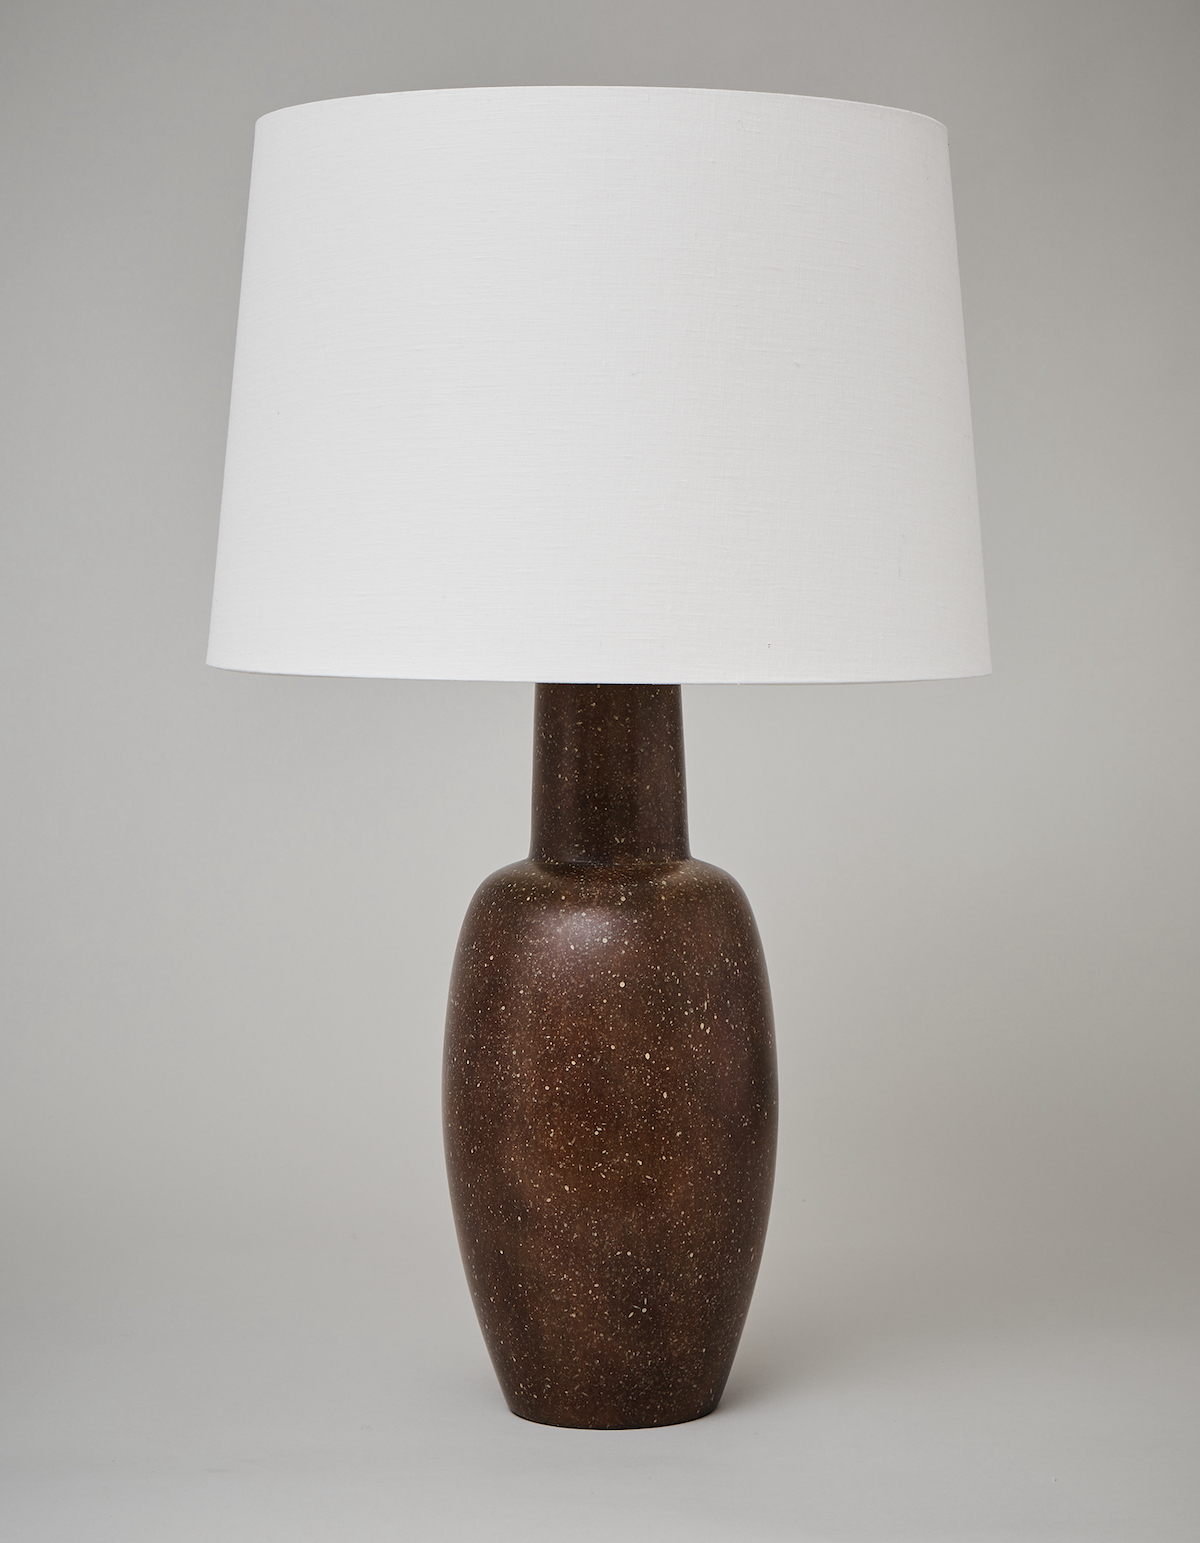 Image caption: Monxton Table Lamp. | Image credit: Vaughan